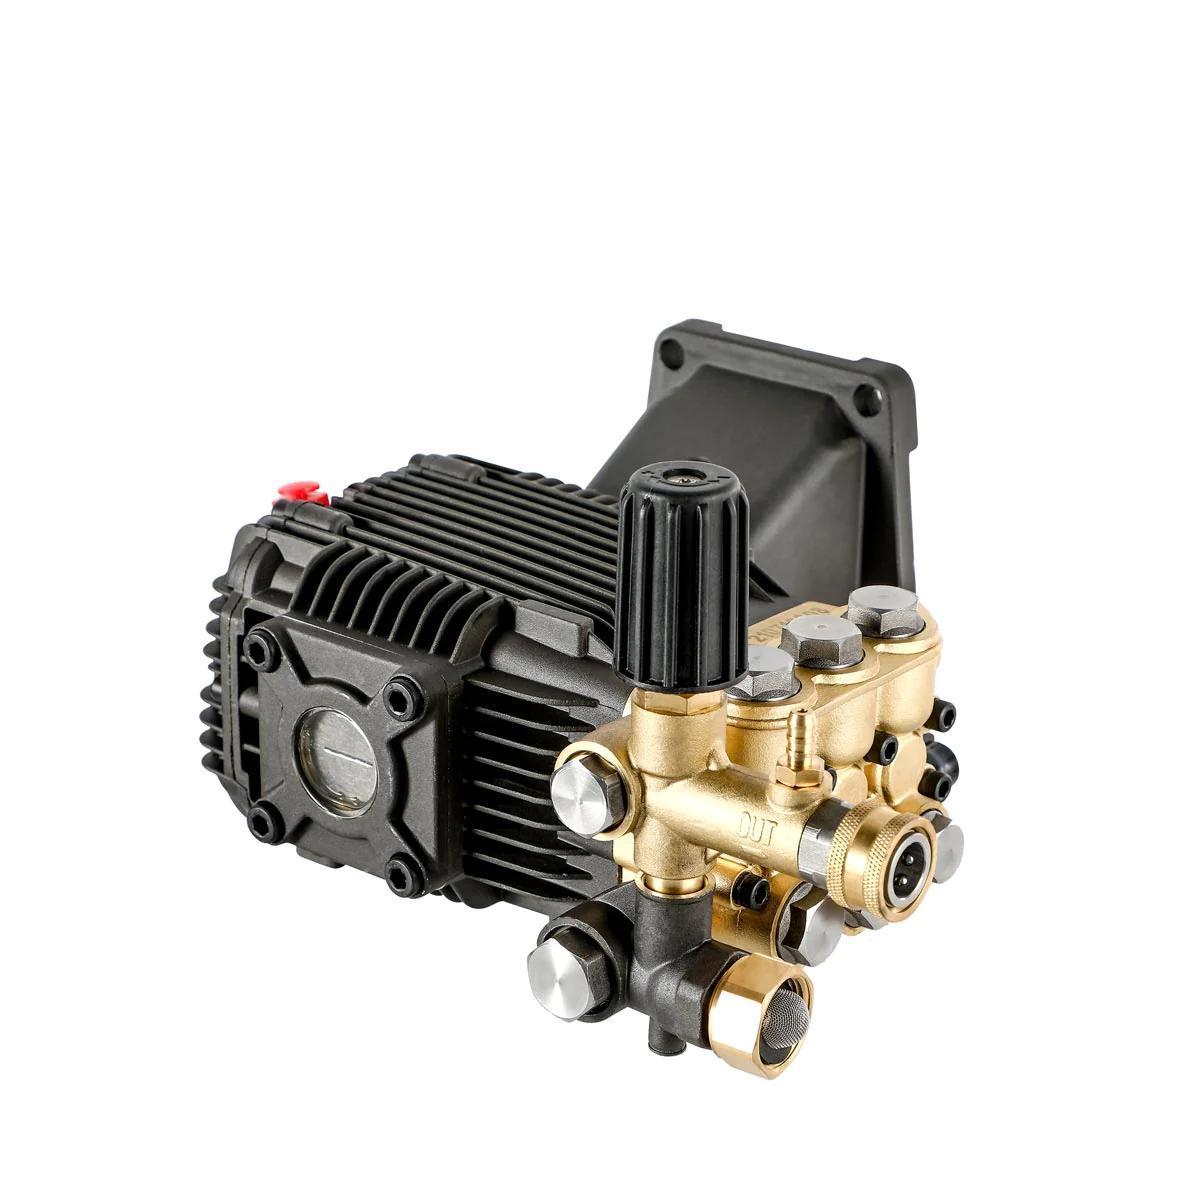 PRESSURE WASHER NEW TMG Industrial Triplex Plunger Pressure Pump, Max. 4000 PSI, 5 GPM, 3400 RPM,